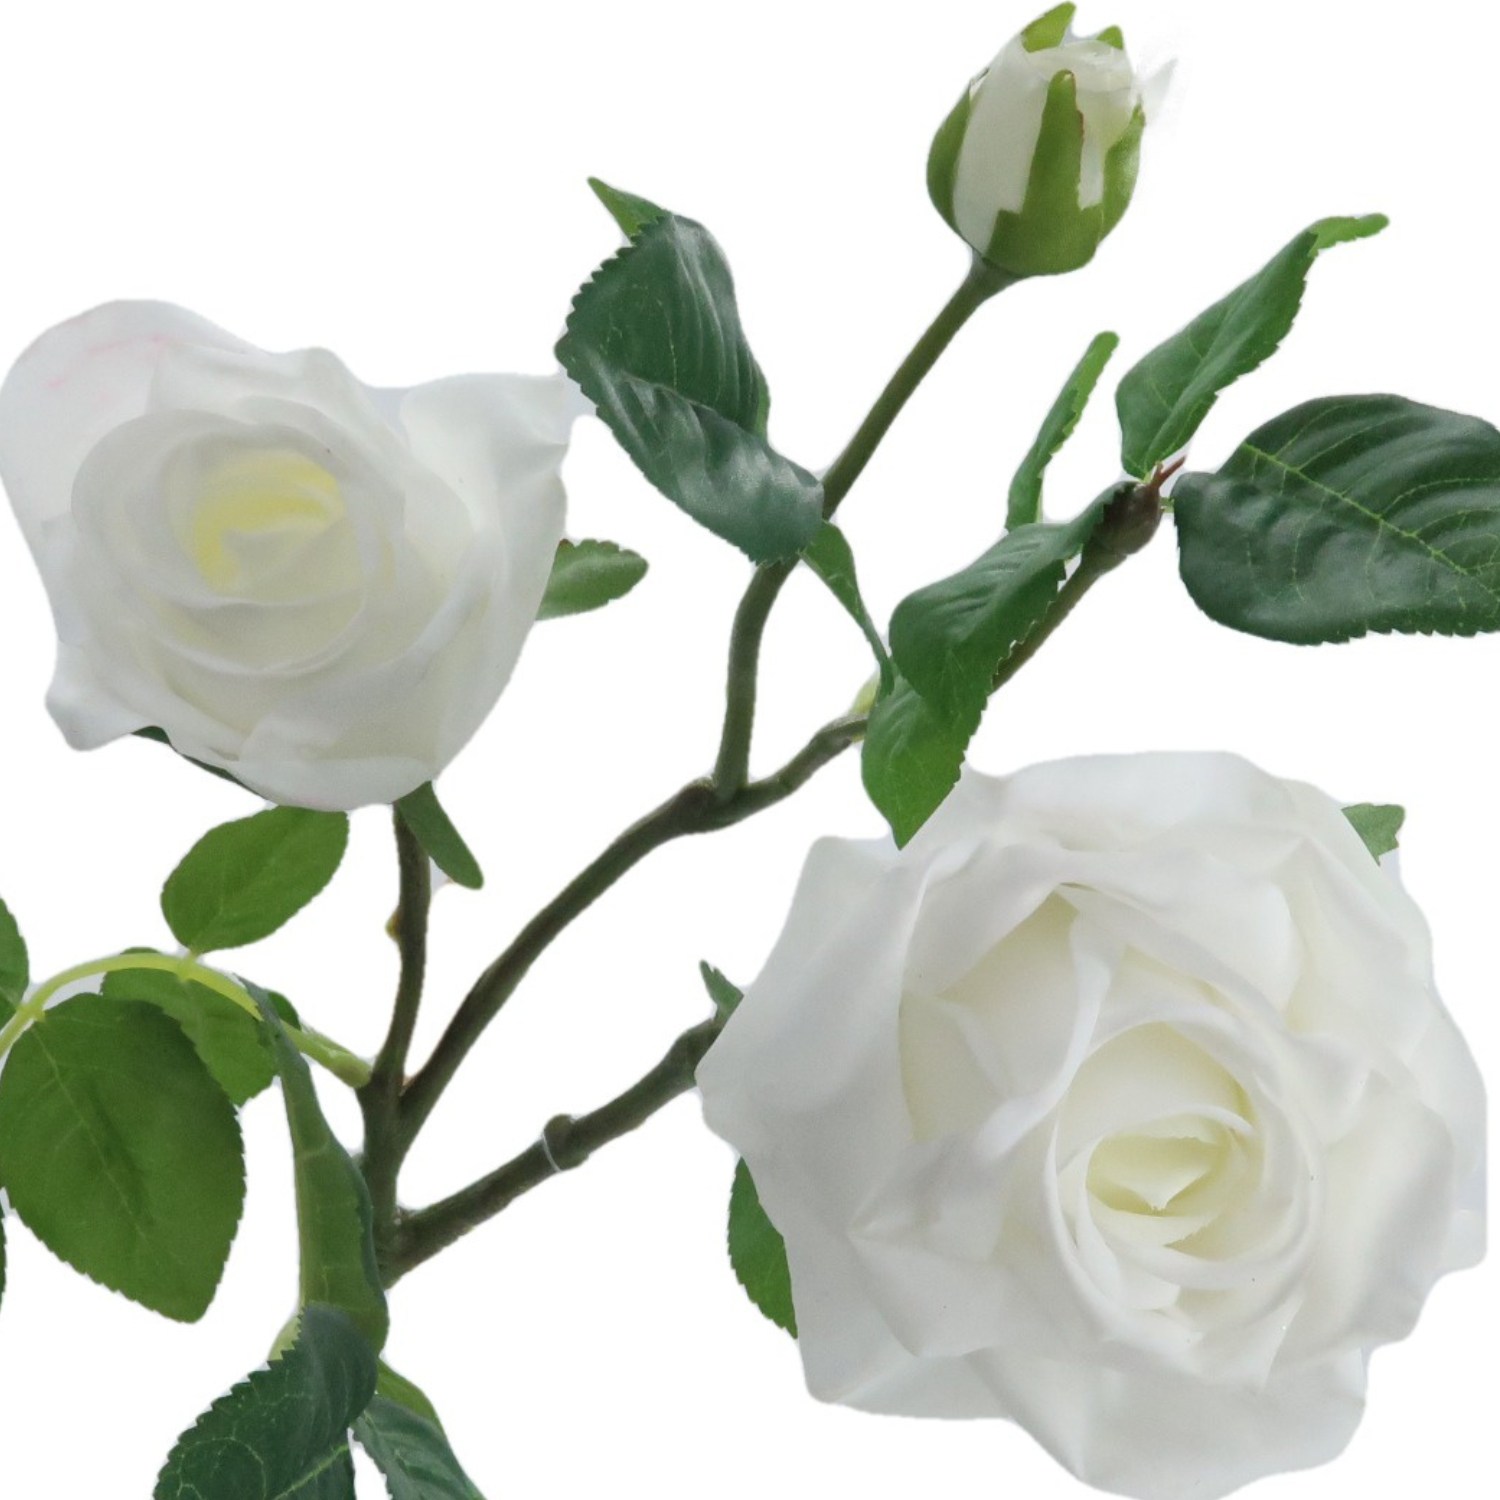 Artificial White Roses Bulk